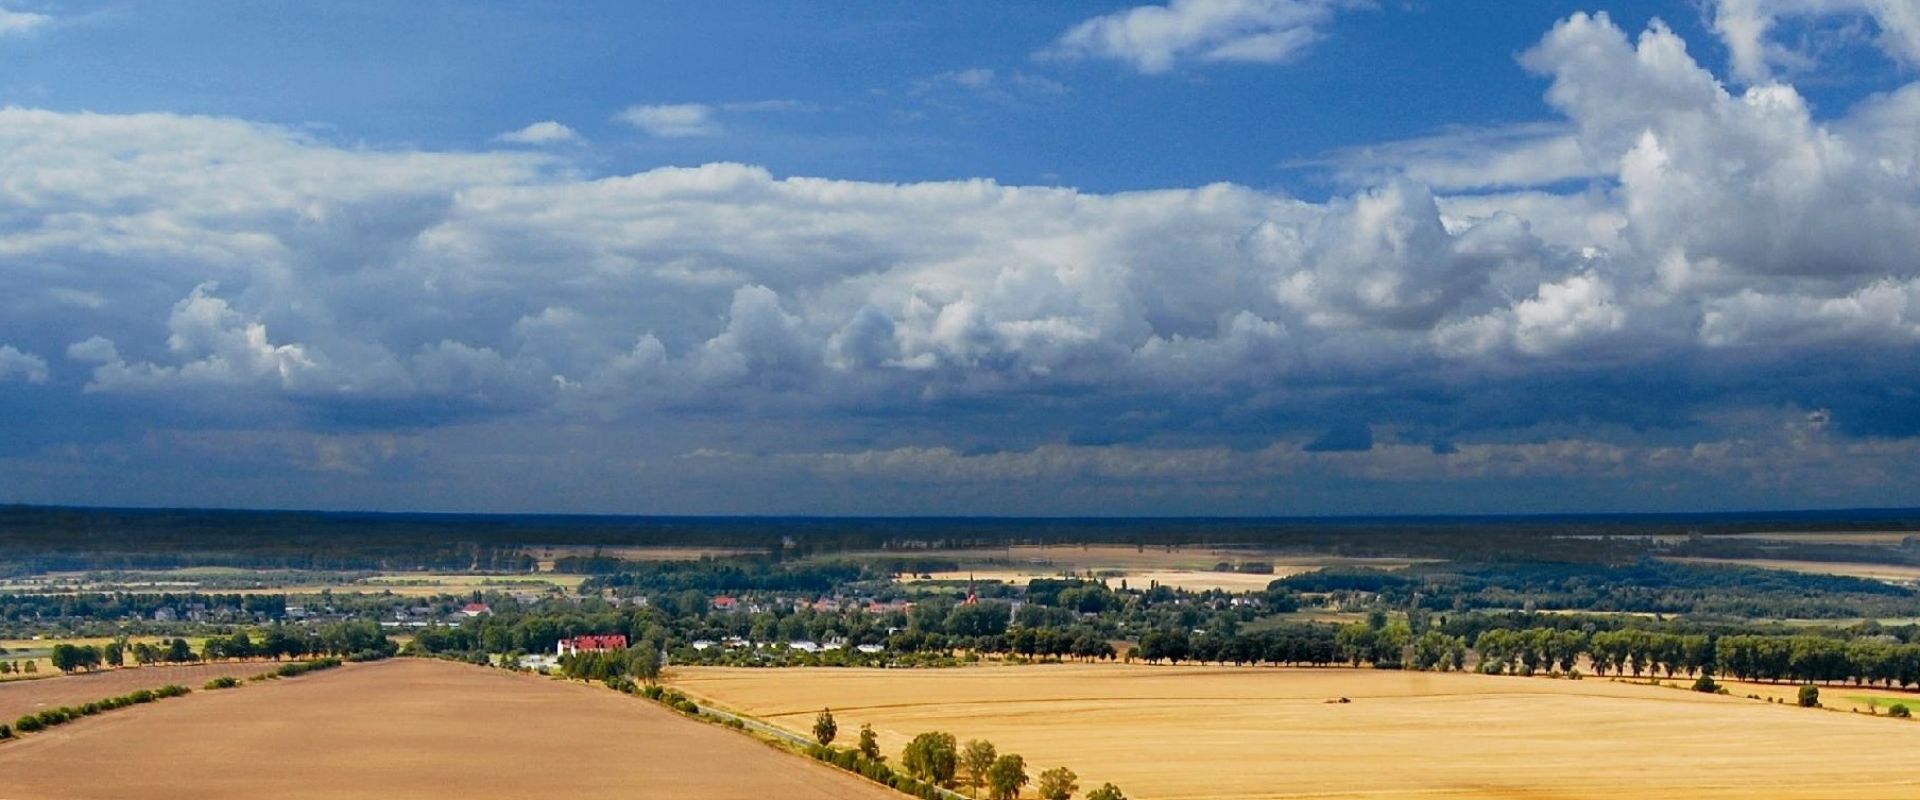 Panorama okolic Łobza: Las, jezioro z lotu ptaka